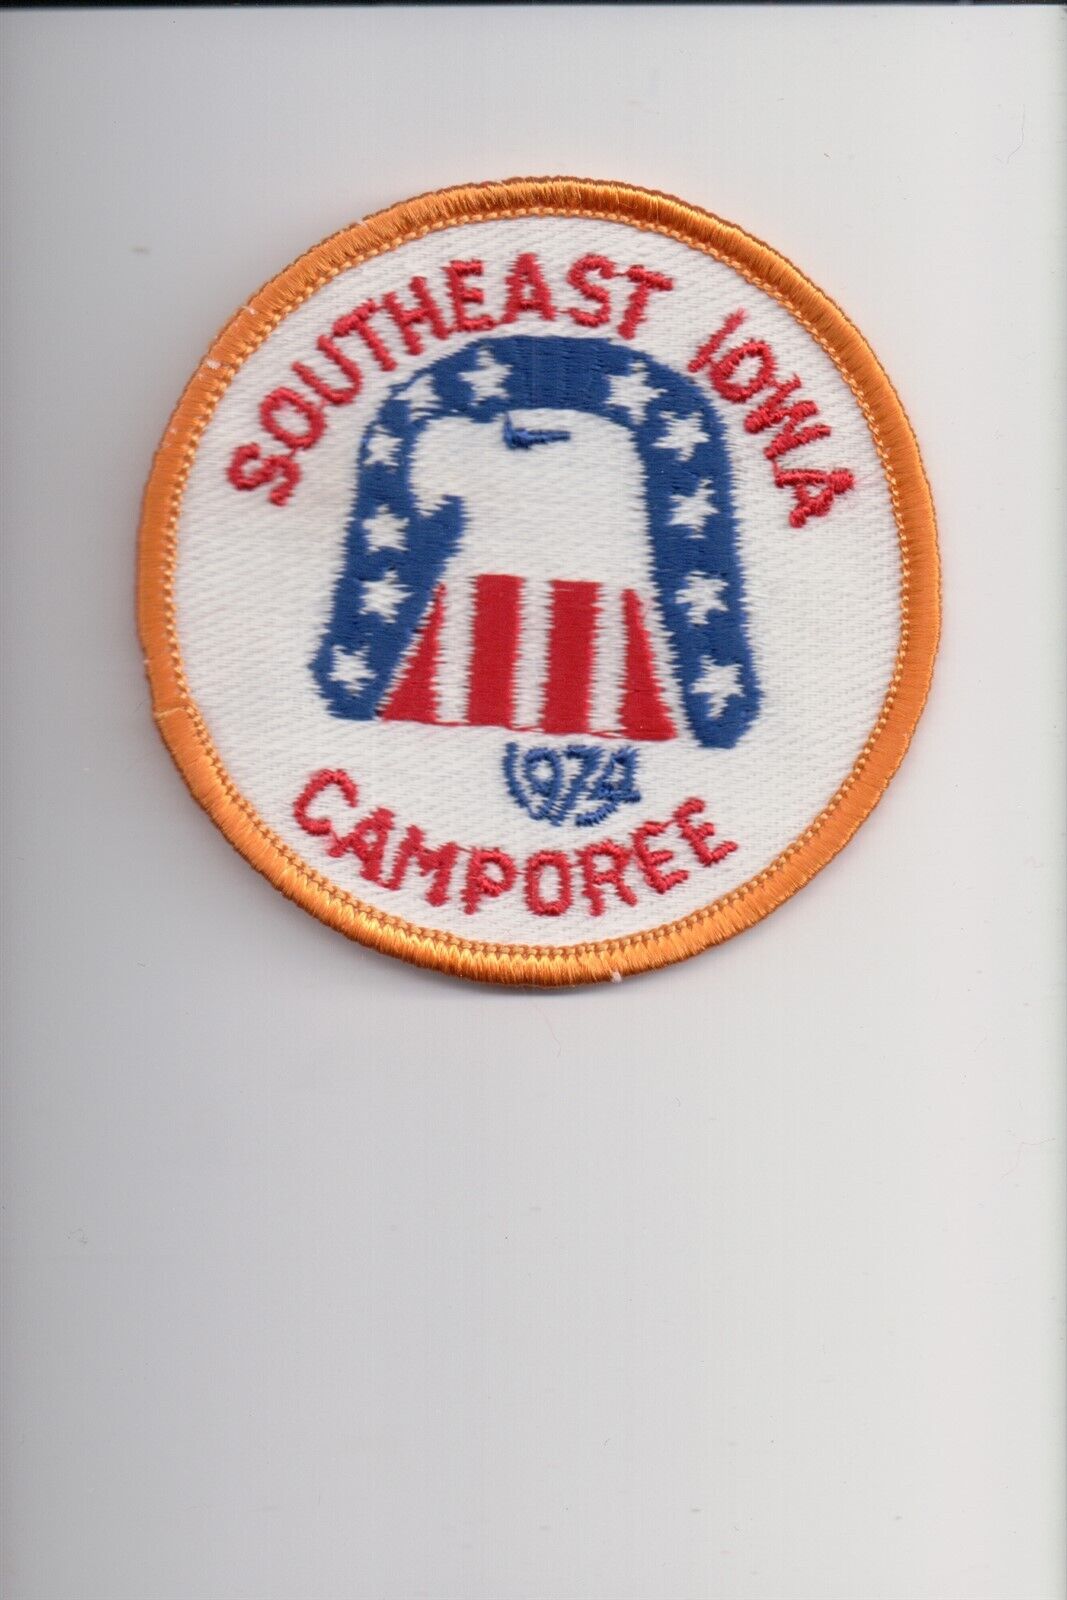 1974 Southeast Iowa Camporee patch